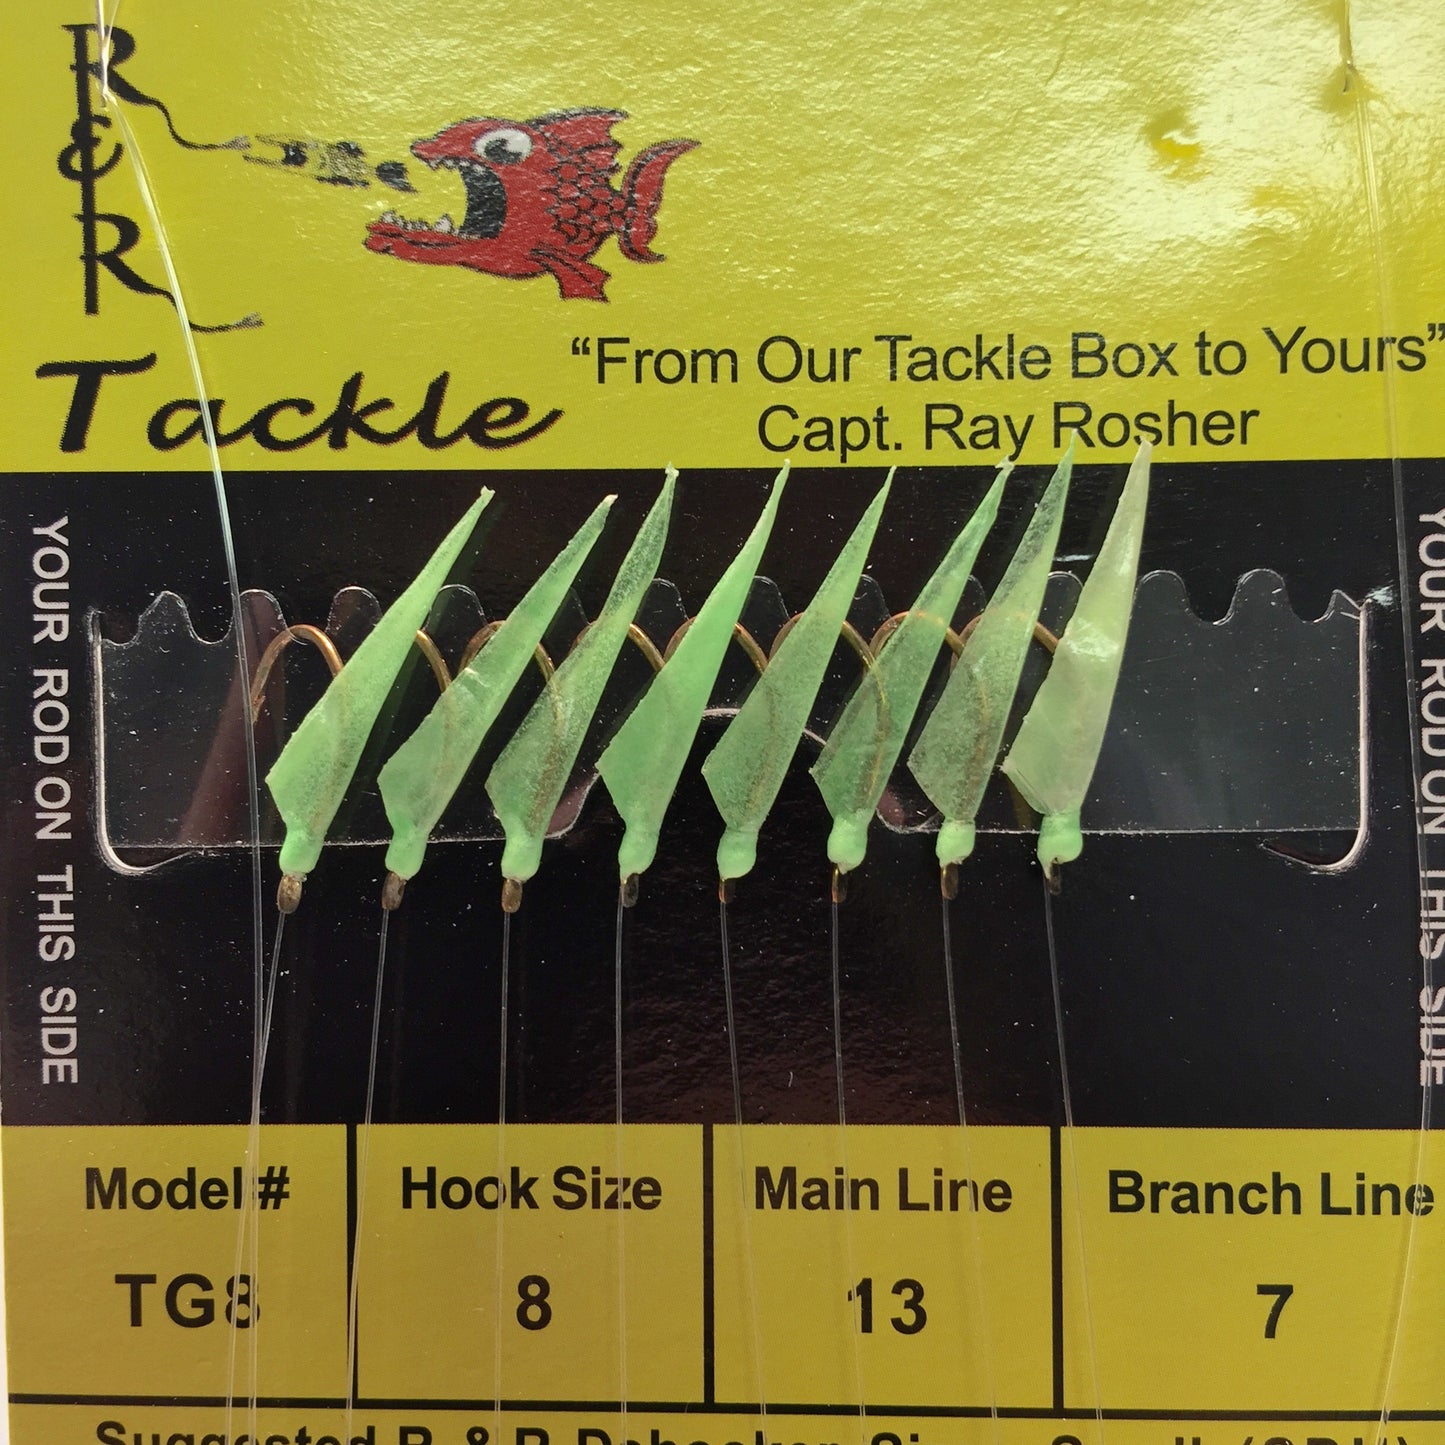 TG8 Bait Rigs - 8 (size 8) hooks with green heads & glow skin (Glows-in-Dark)